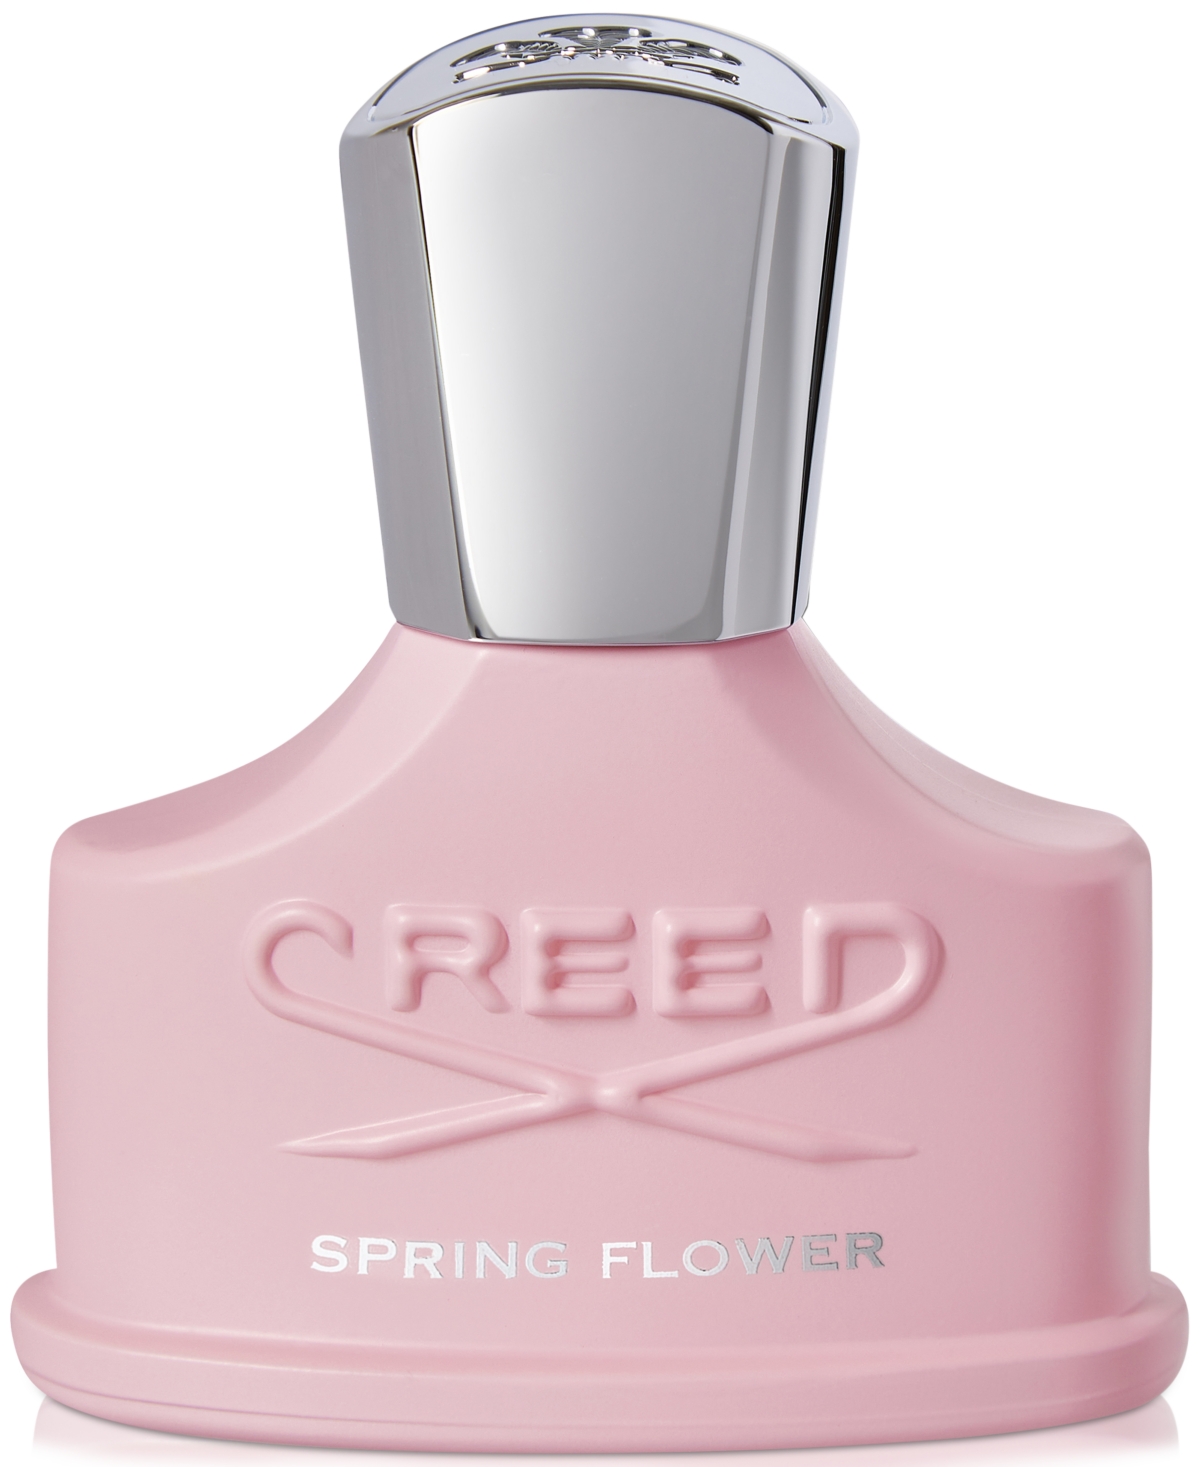 Creed Spring Flower, 1 Oz.